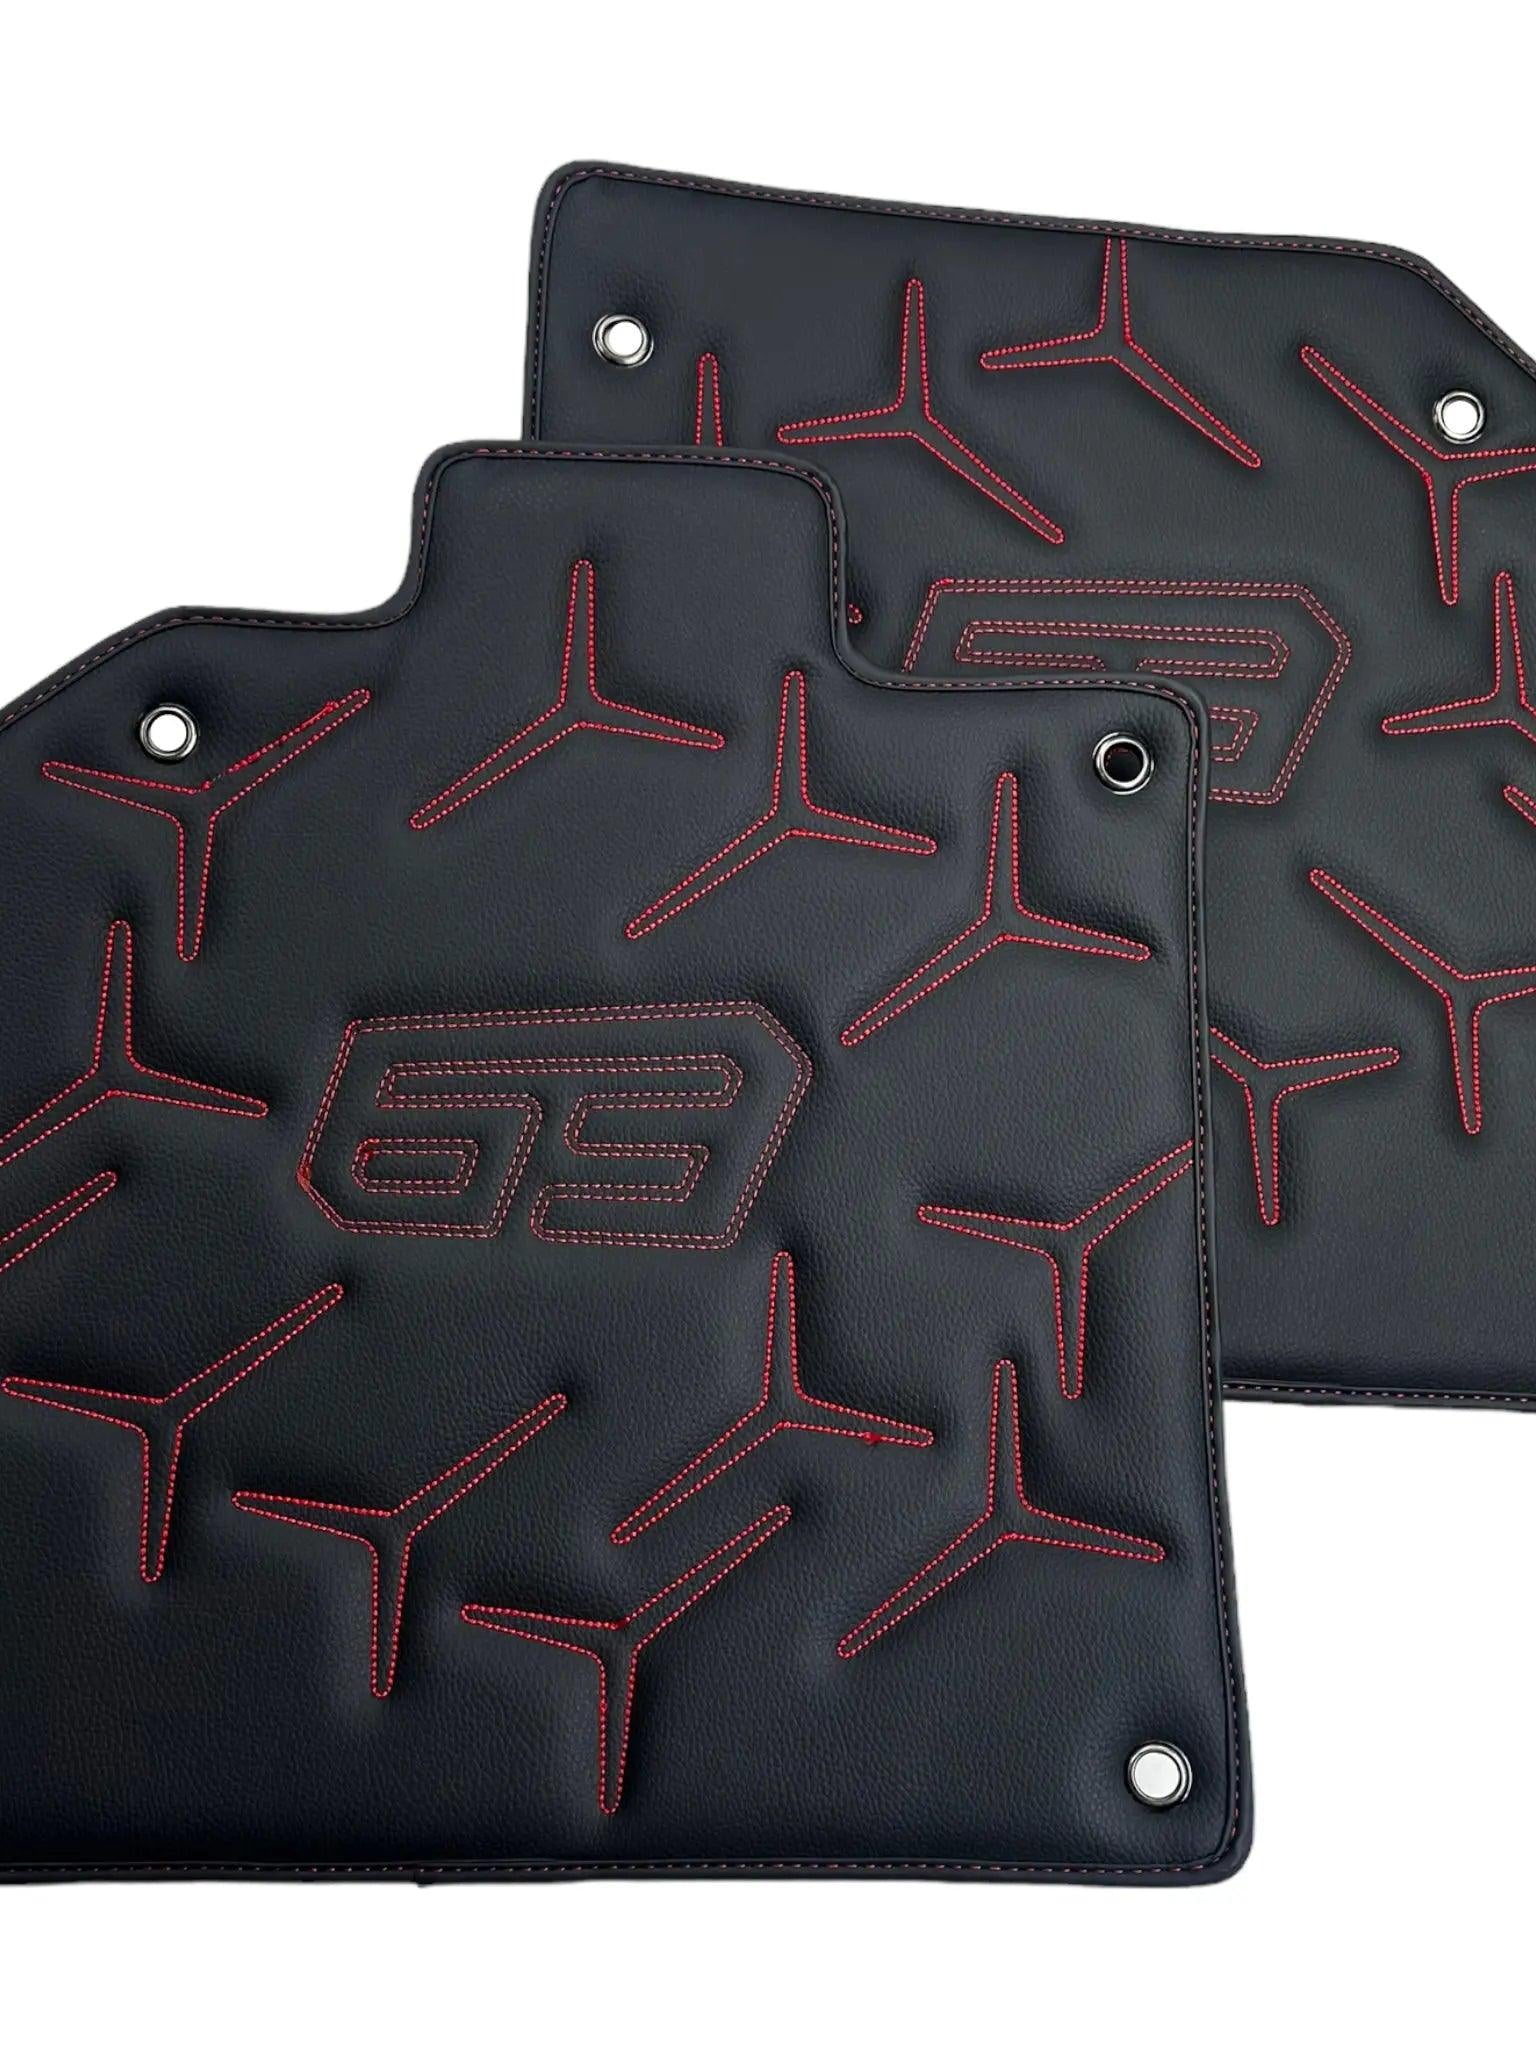 Black Leather Floor Mats for Lamborghini Aventador SVJ "63 Edition"